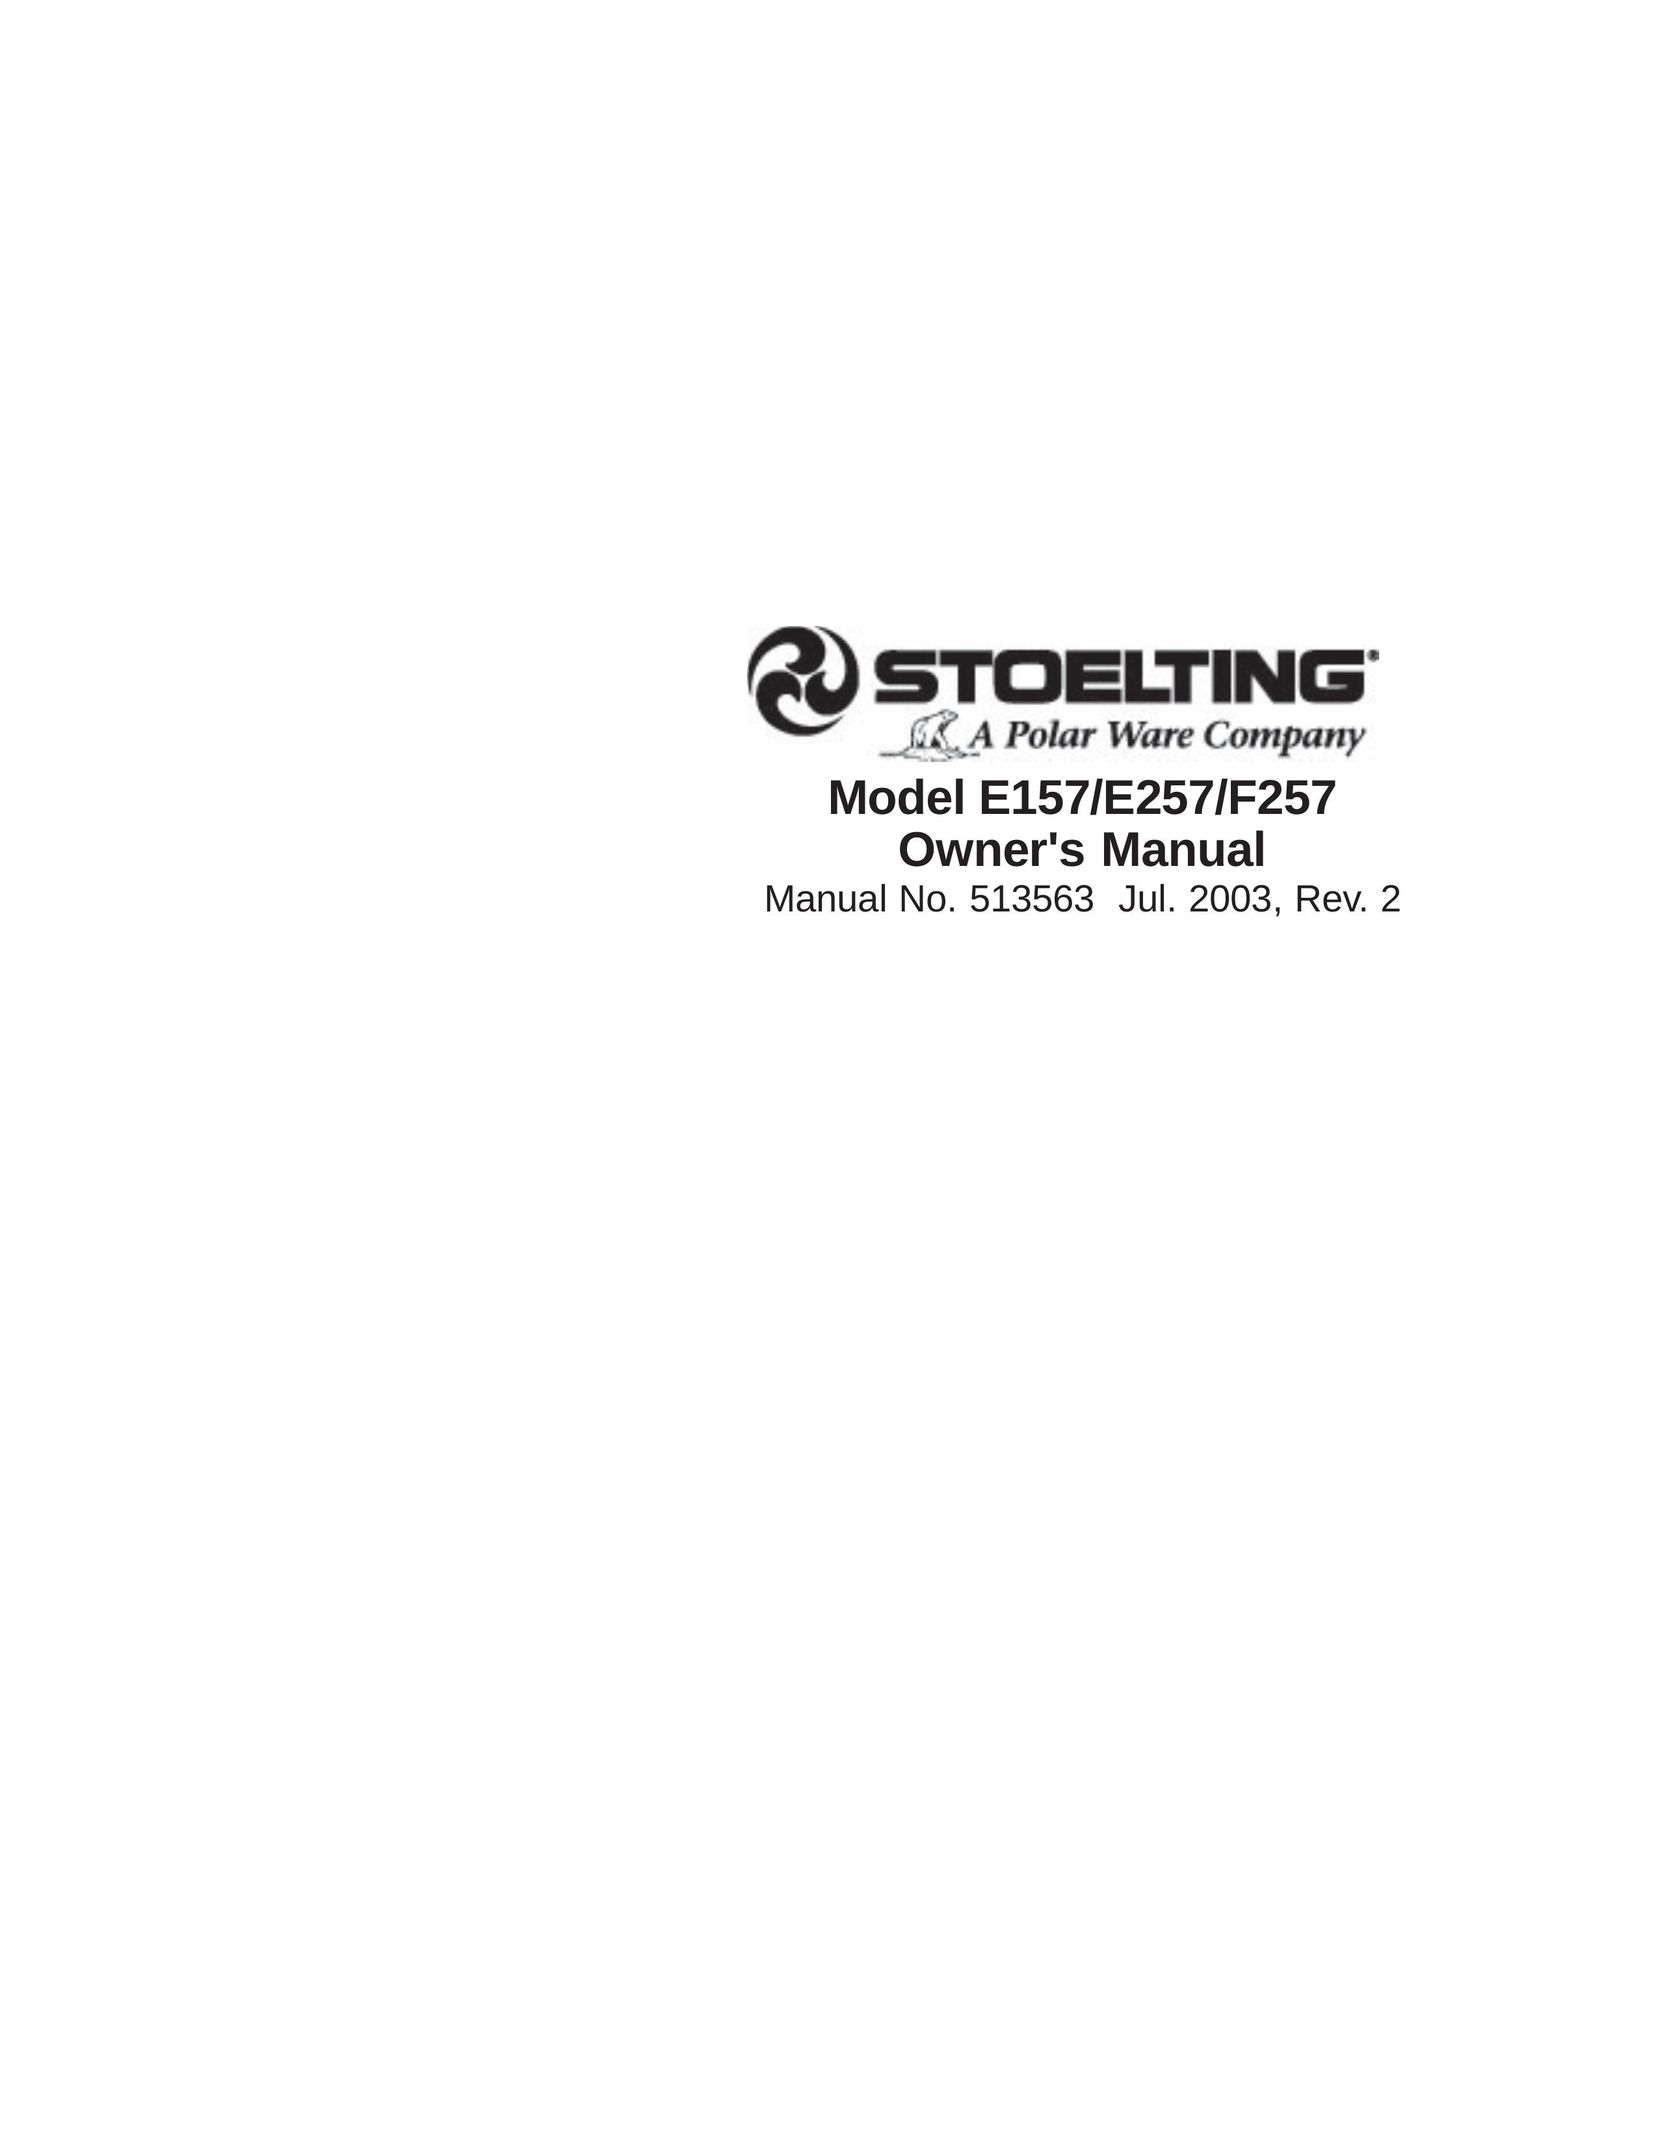 Stoelting E157 Freezer User Manual